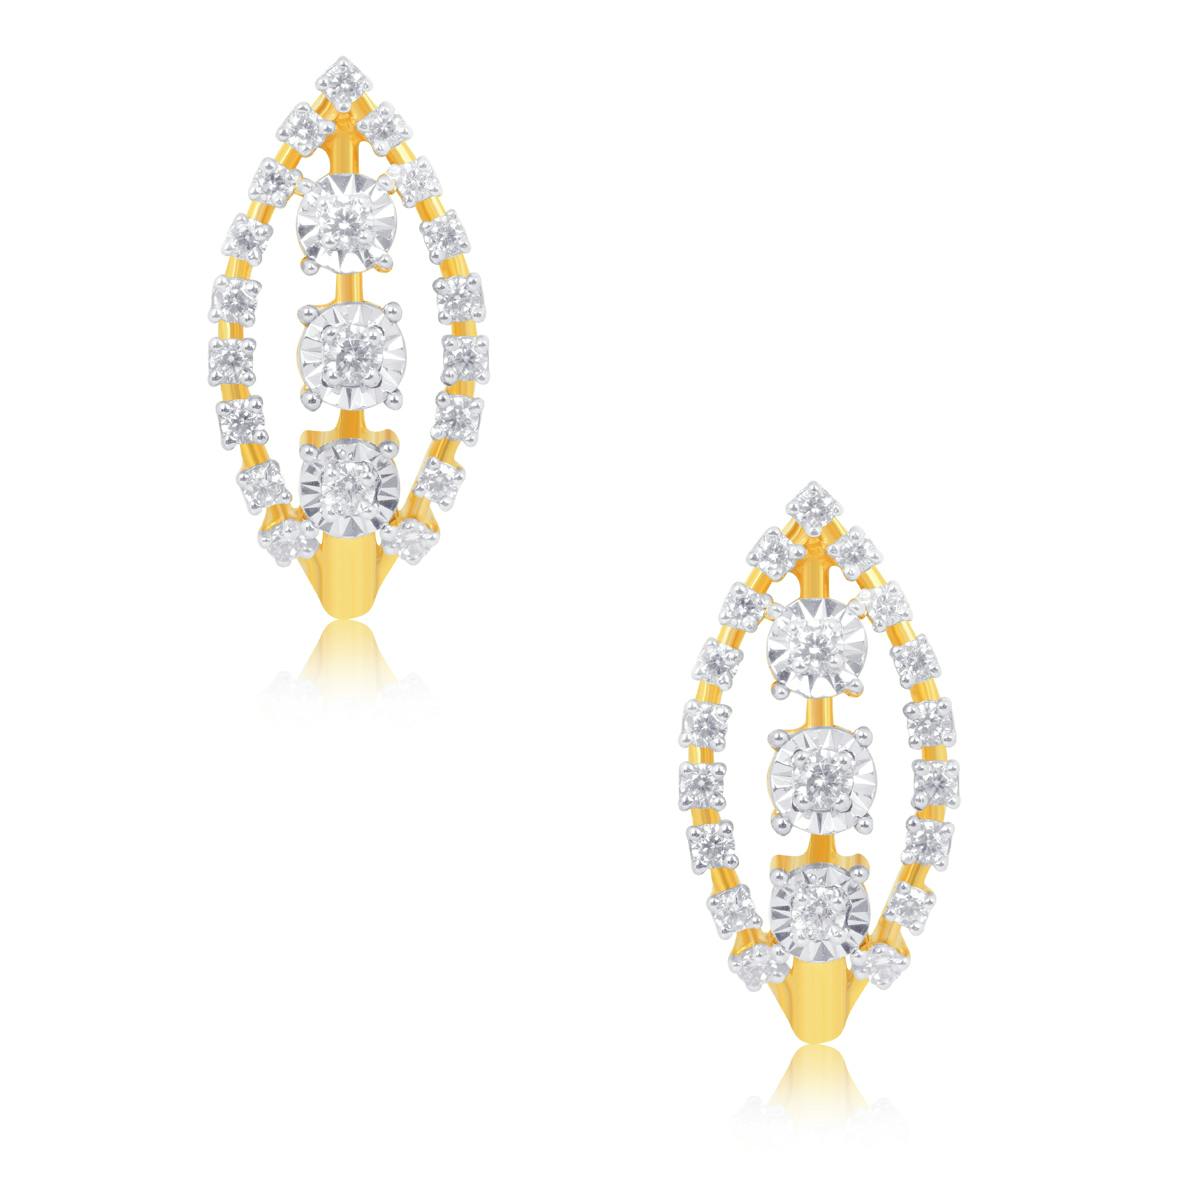 Thalia diamond earrings